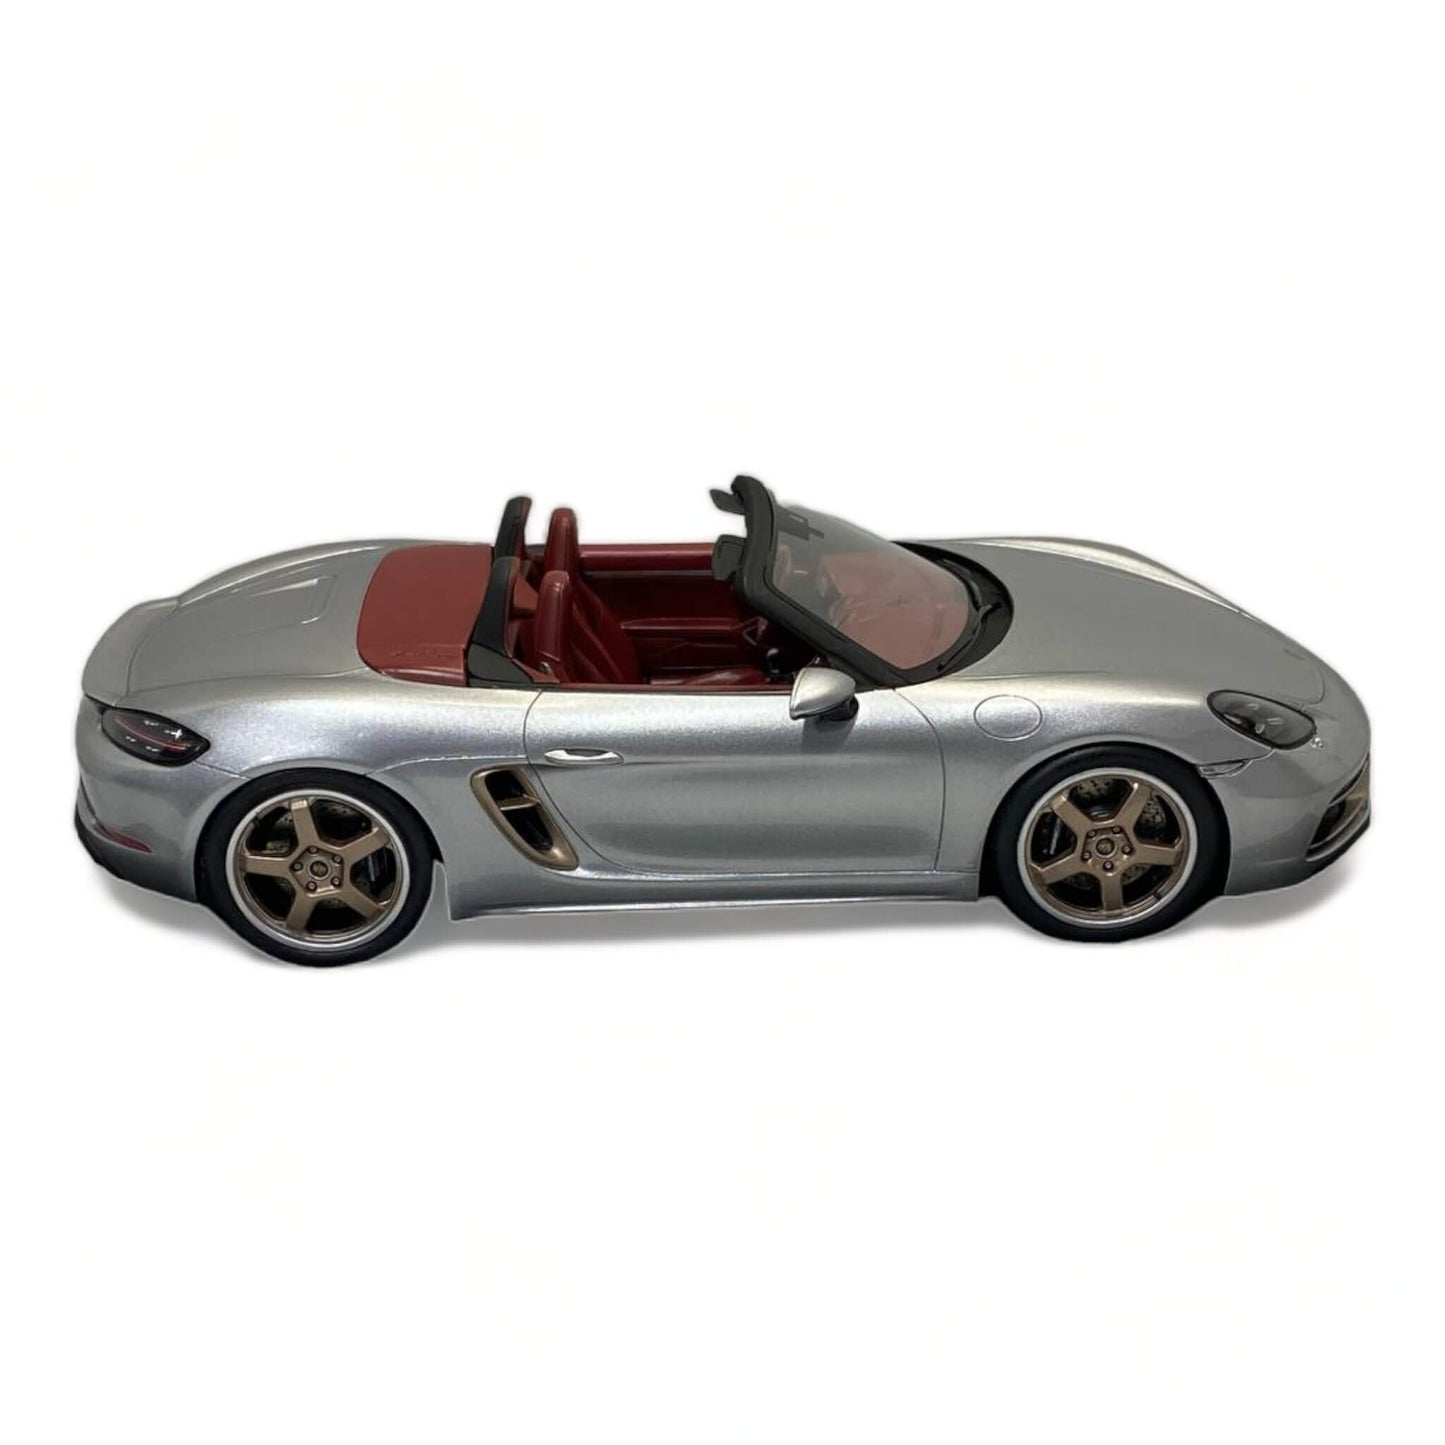 Minichamps Porsche Boxster 25 Jahre Silver (1/18) Model Car Dturman Dubai UAE|Sold in Dturman.com Dubai UAE.